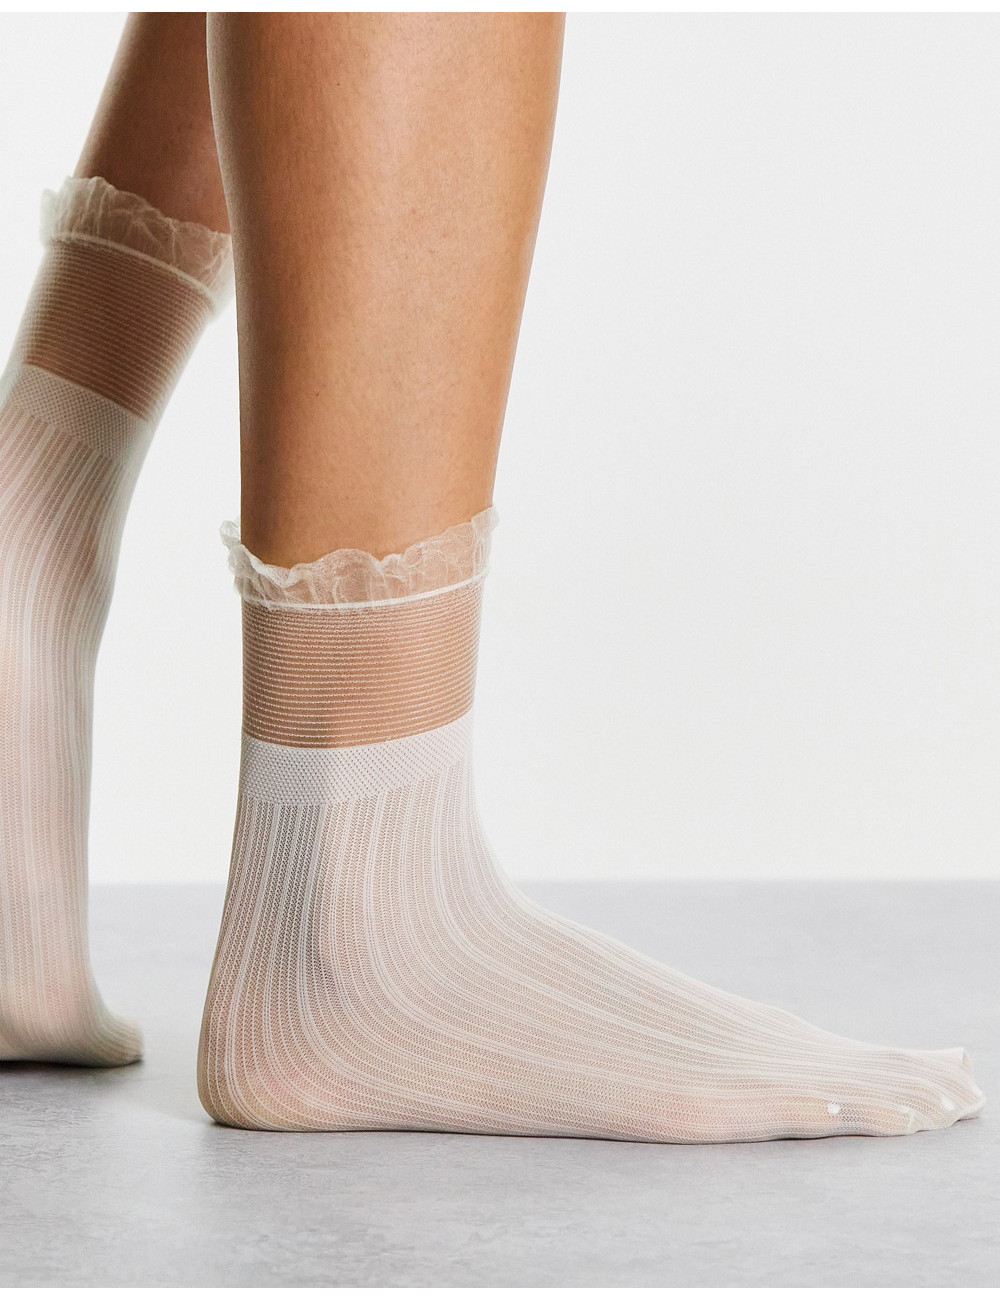 Ego tulle ankle socks in white